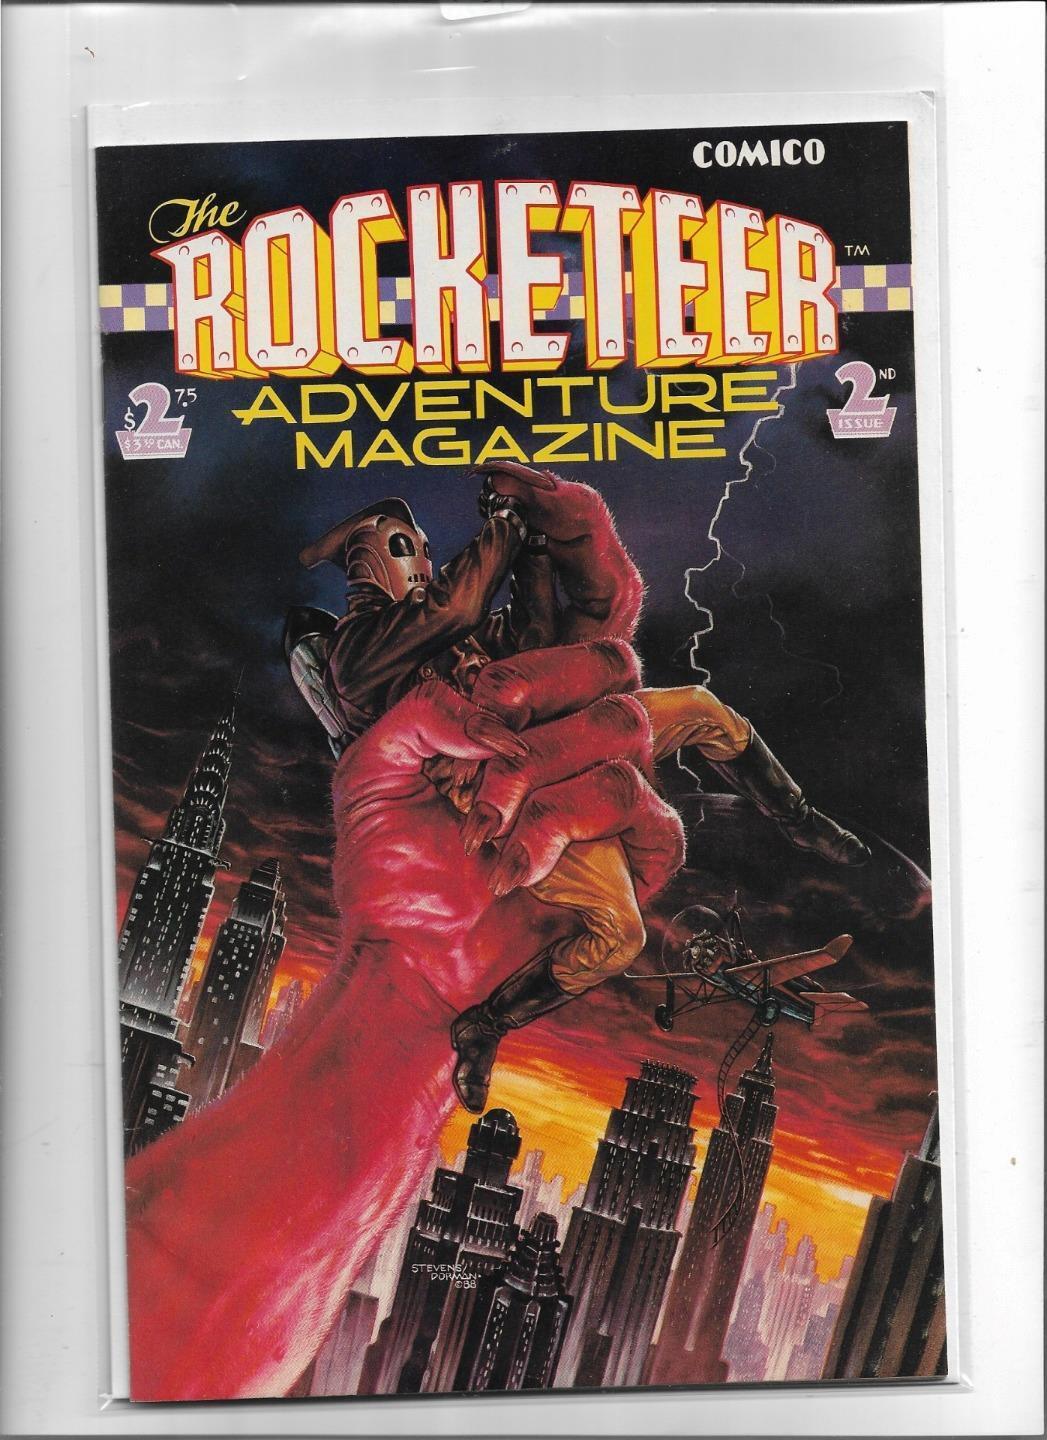 THE ROCKETEER ADVENTURE MAGAZINE #2 1989 VERY FINE-NEAR MINT 9.0 3754